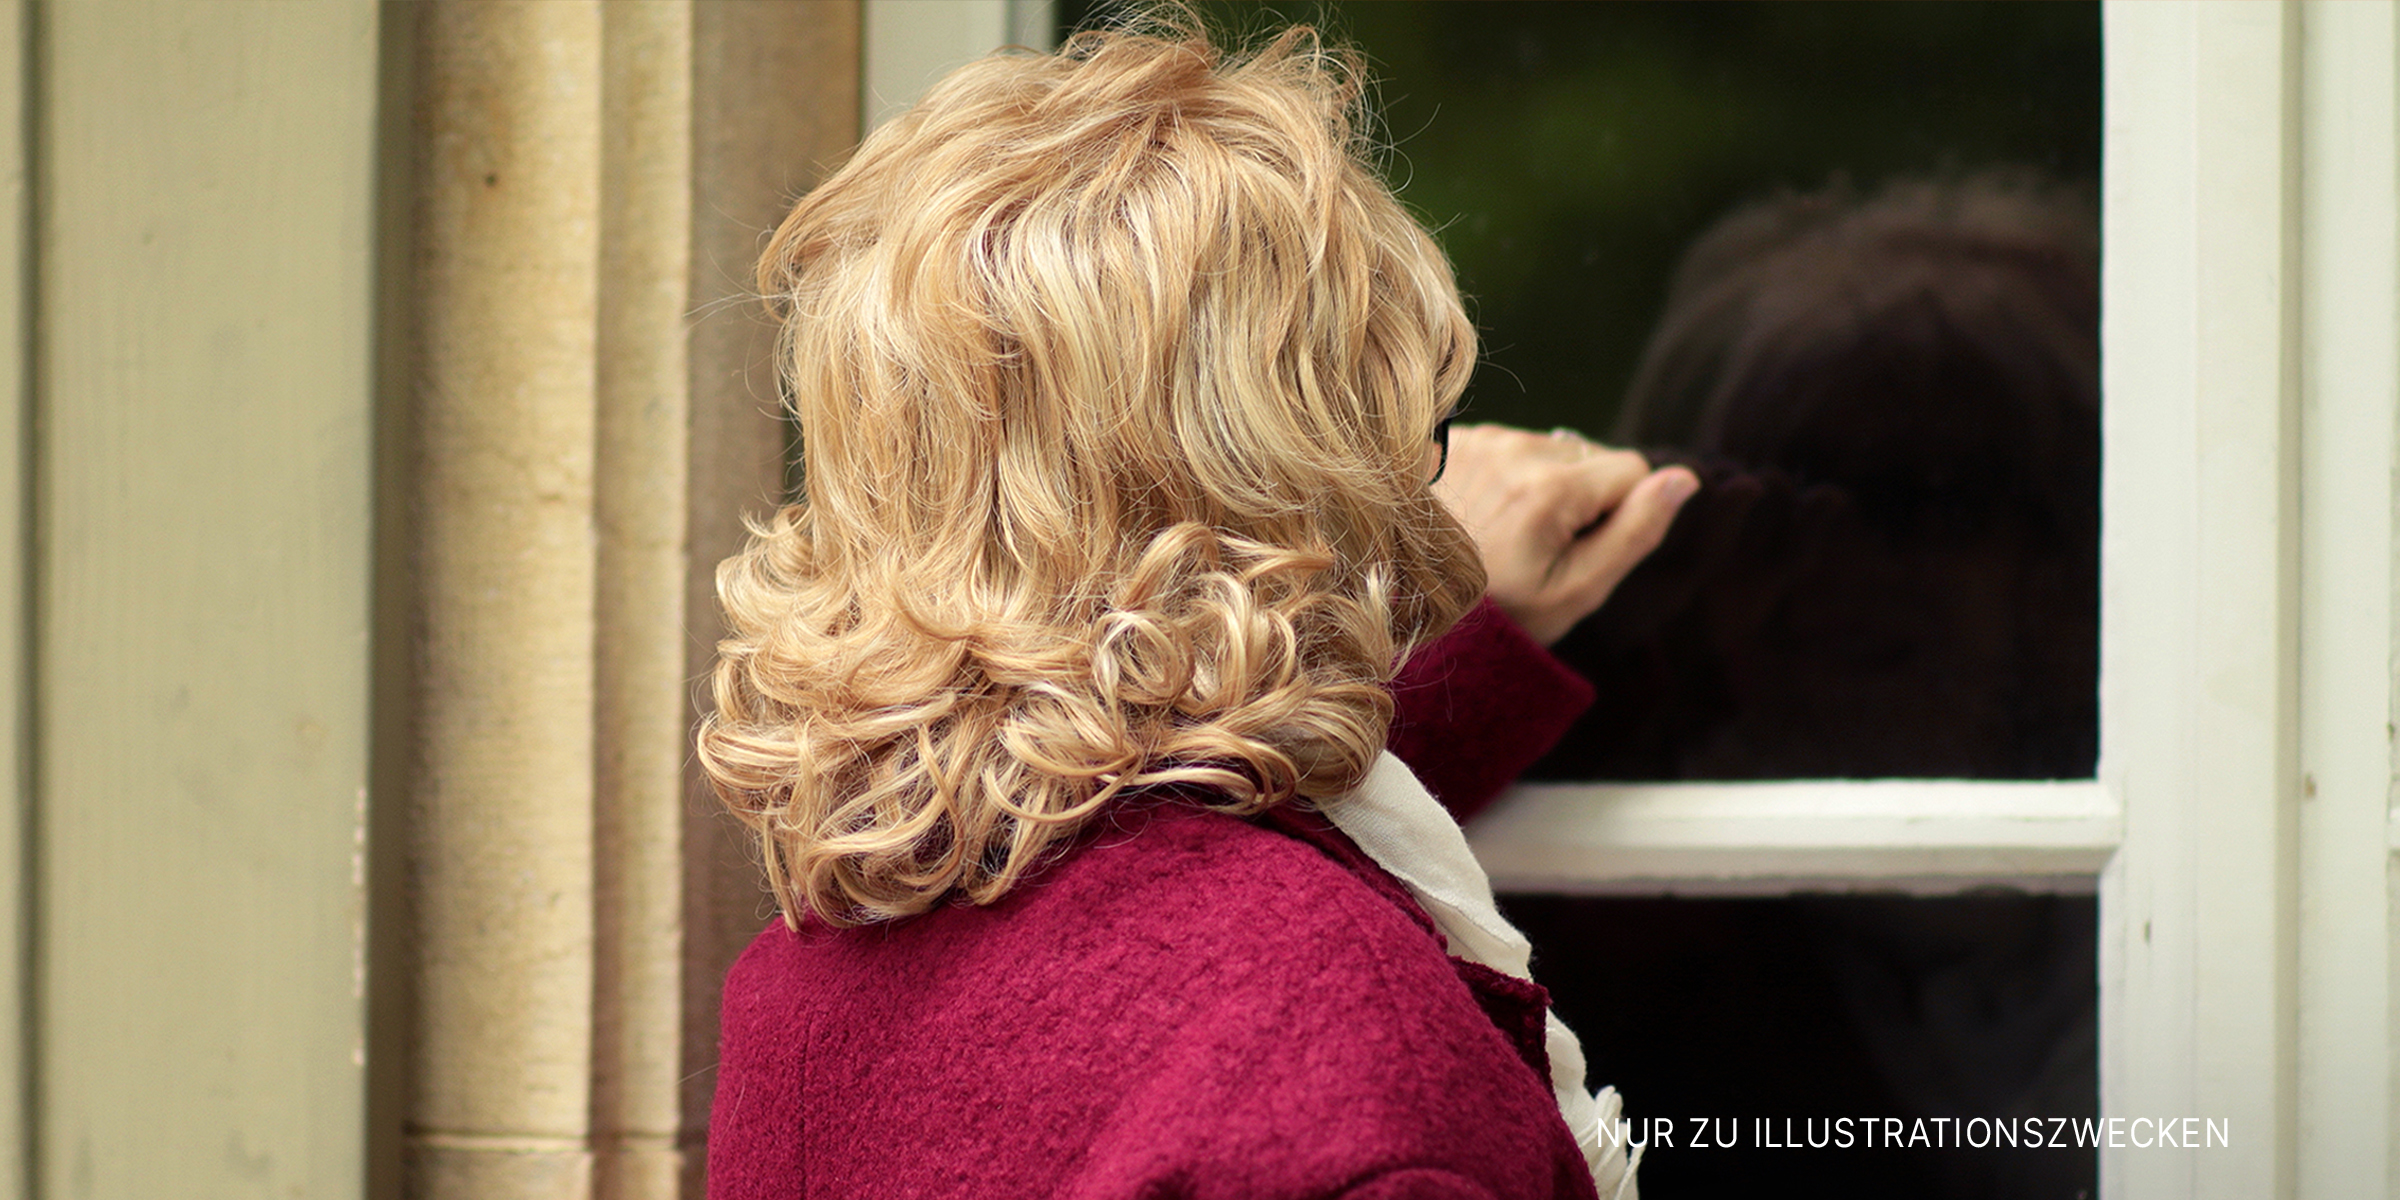 Frau klopft an die Tür | Quelle: Shutterstock